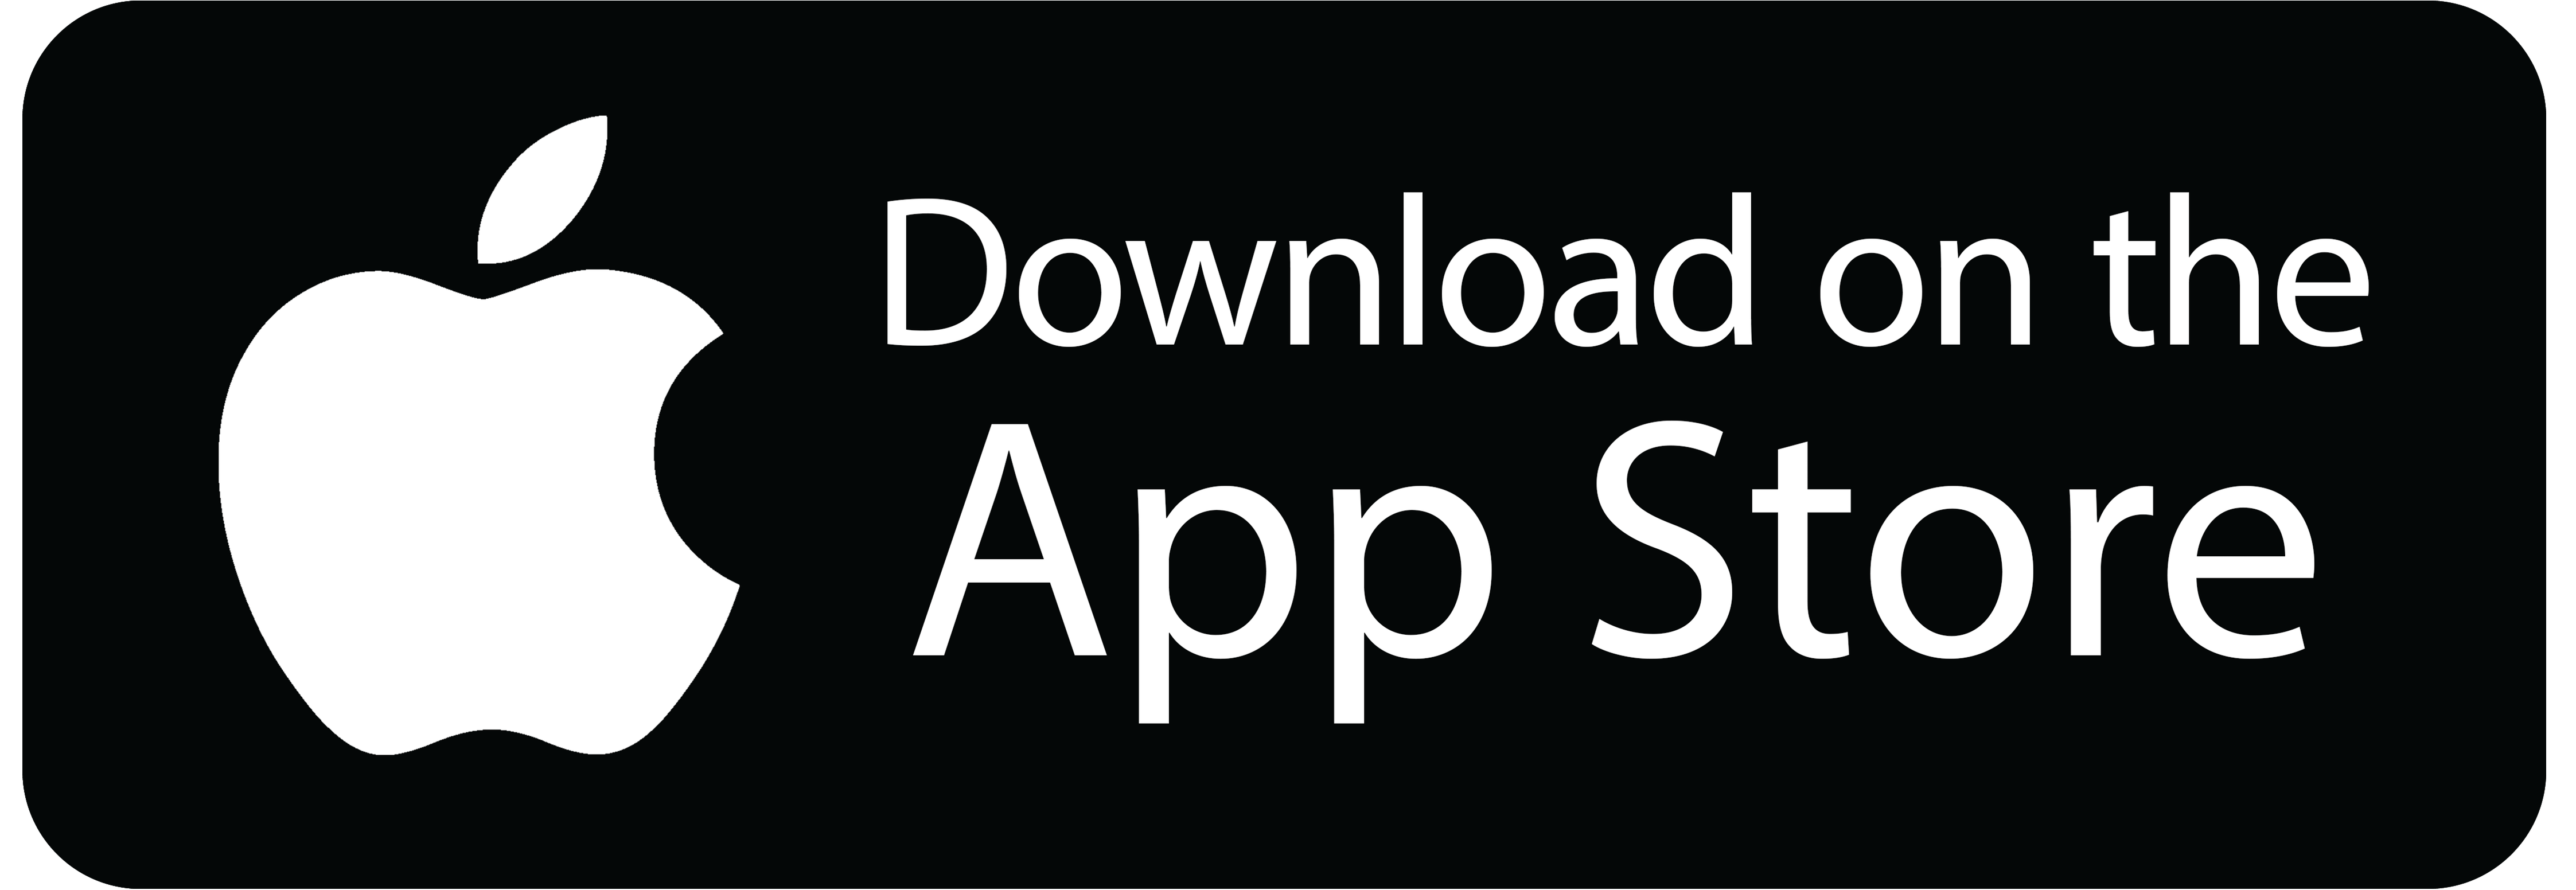 App Store Logo - itunes-app-store-logo - SITECH